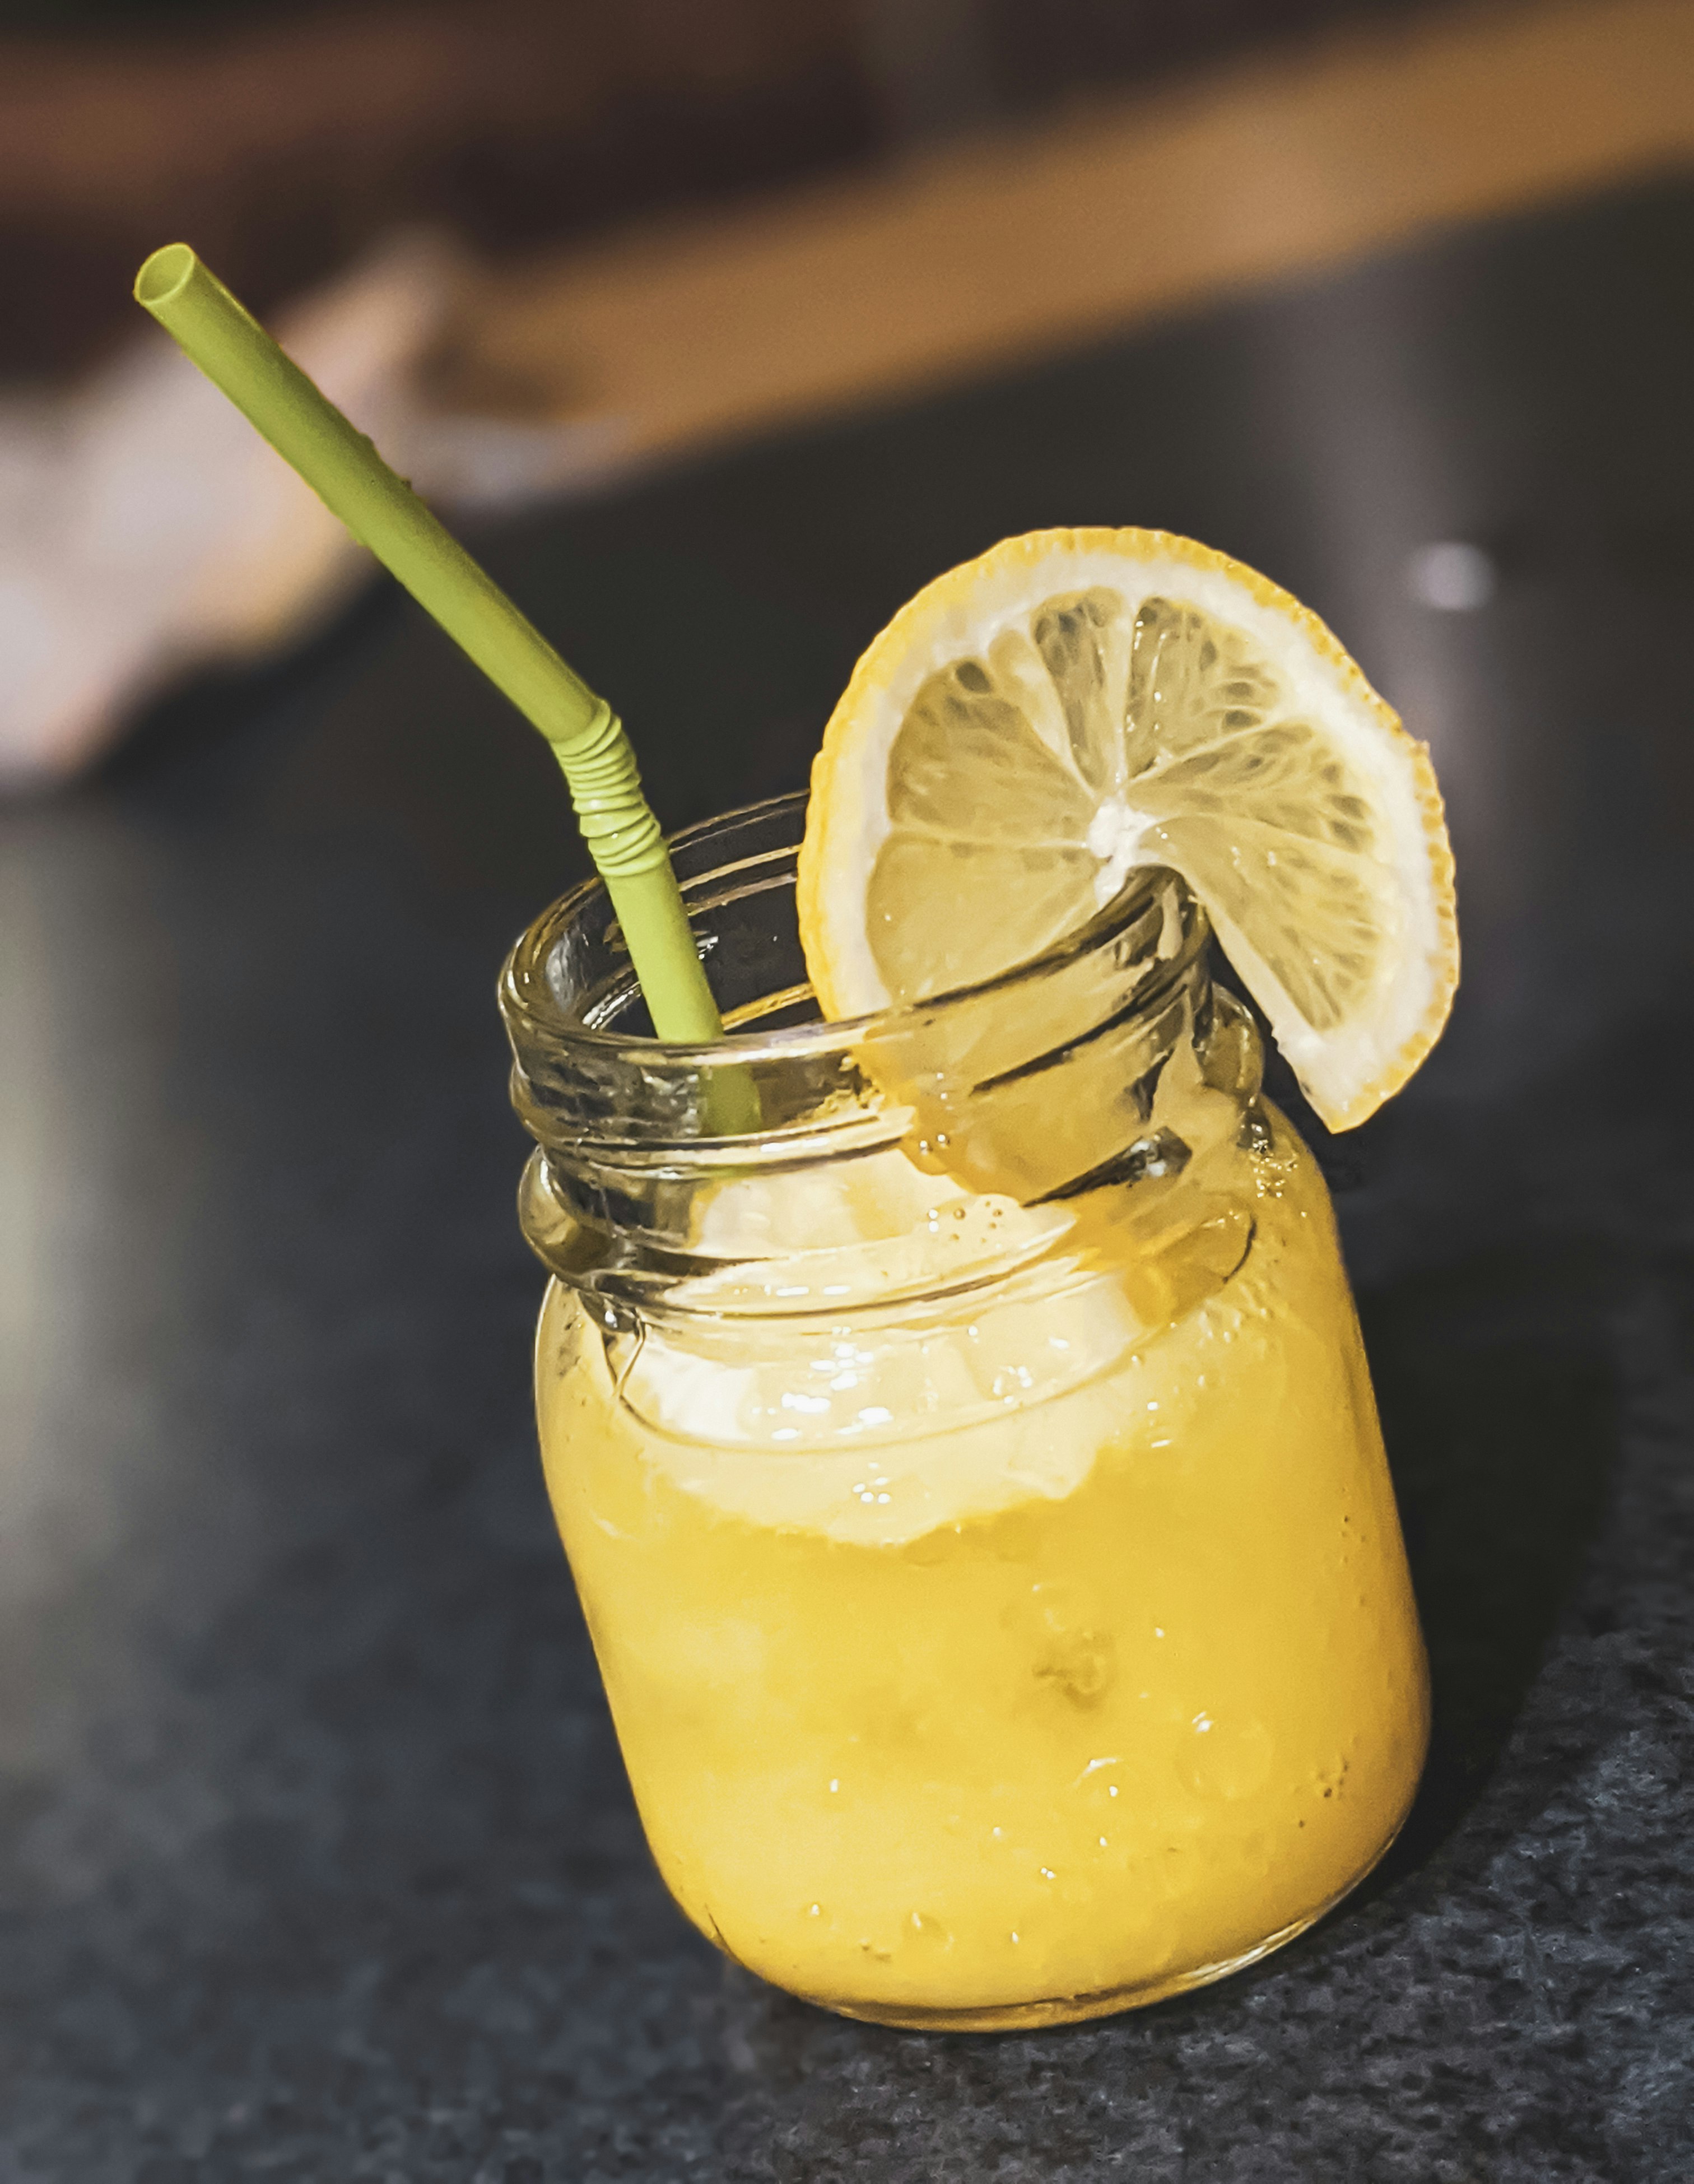 yellow juice in clear glass jar